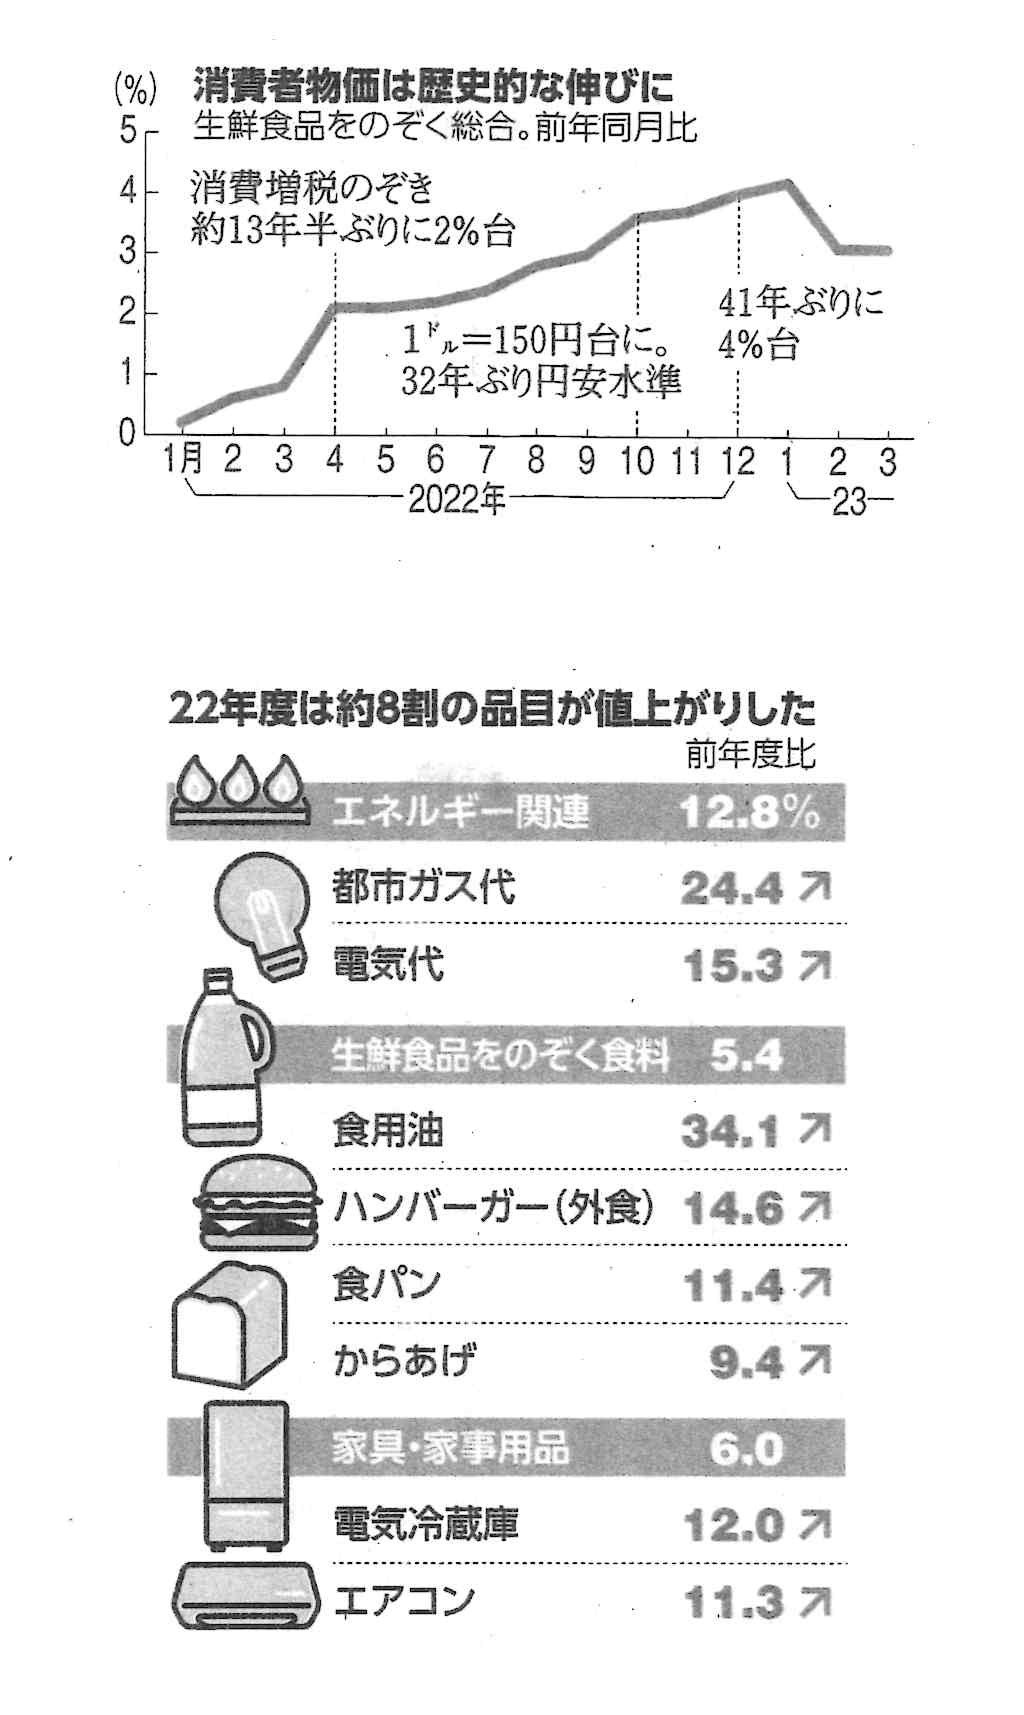 https://musashino-kaikei.com/press/user_upload/%E7%89%A9%E4%BE%A1%E4%BC%B8%E3%81%B3.jpg